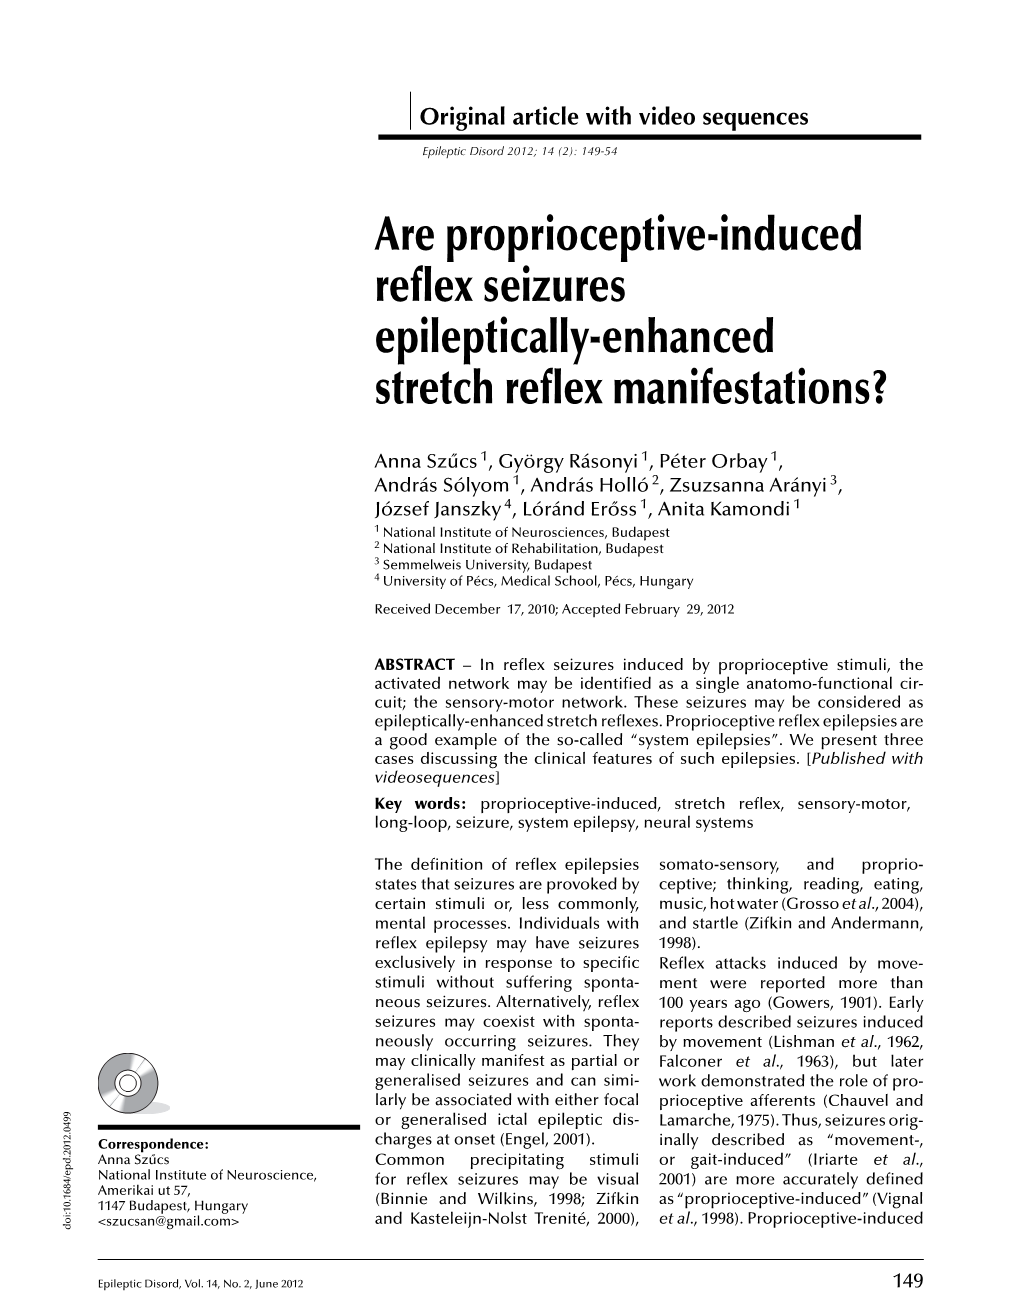 Are Proprioceptive-Induced Reflex Seizures Epileptically-Enhanced